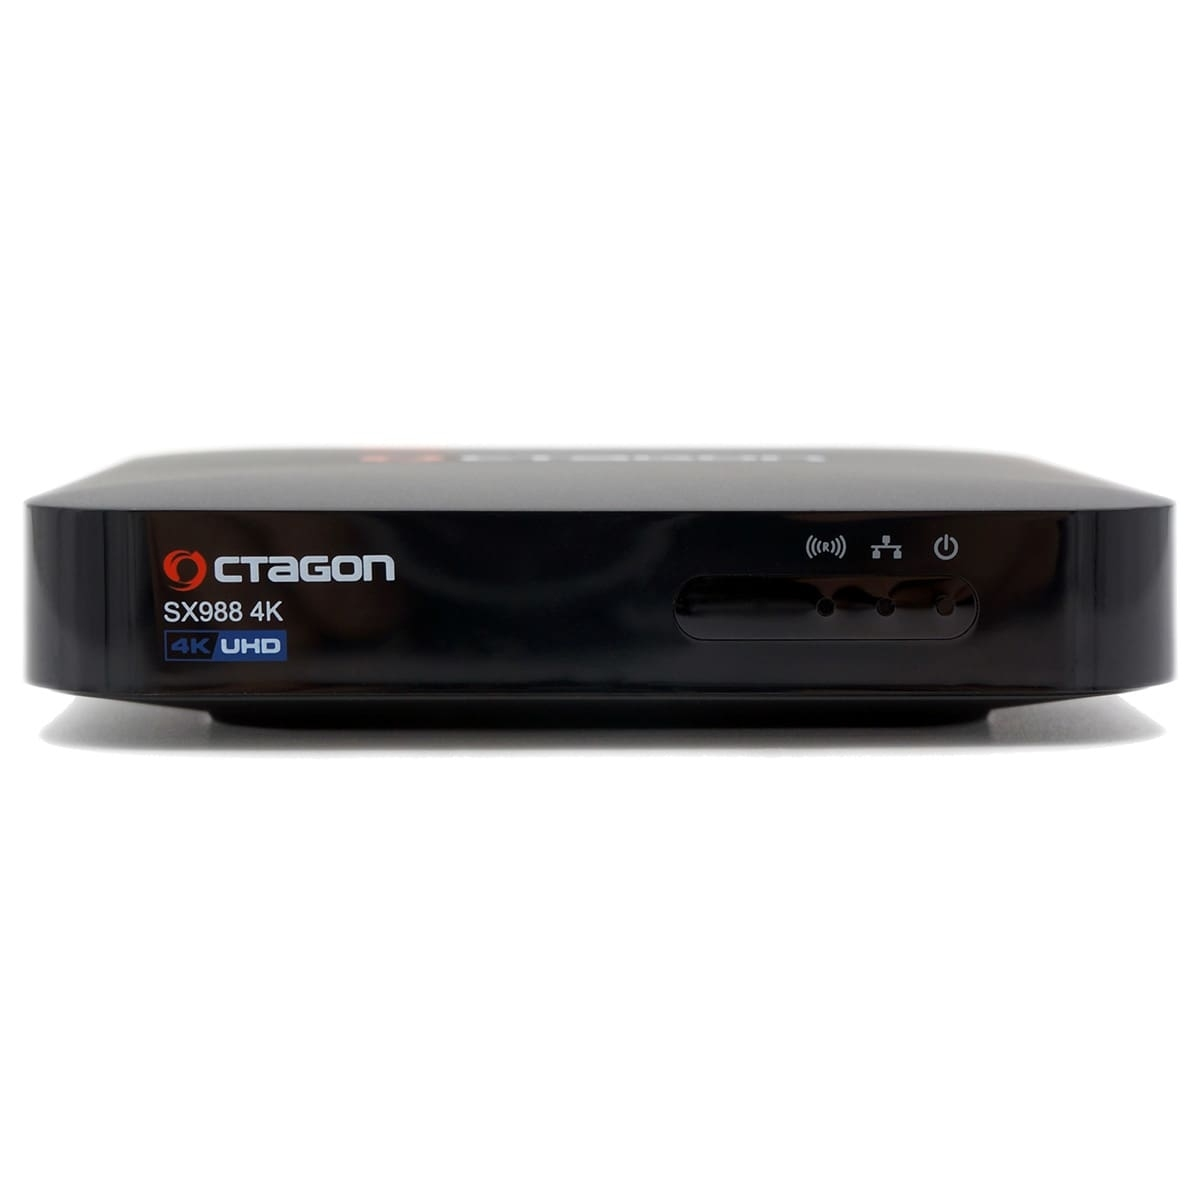 OCTAGON SX988 IP 300 Mbit/s Wifi 8 GB